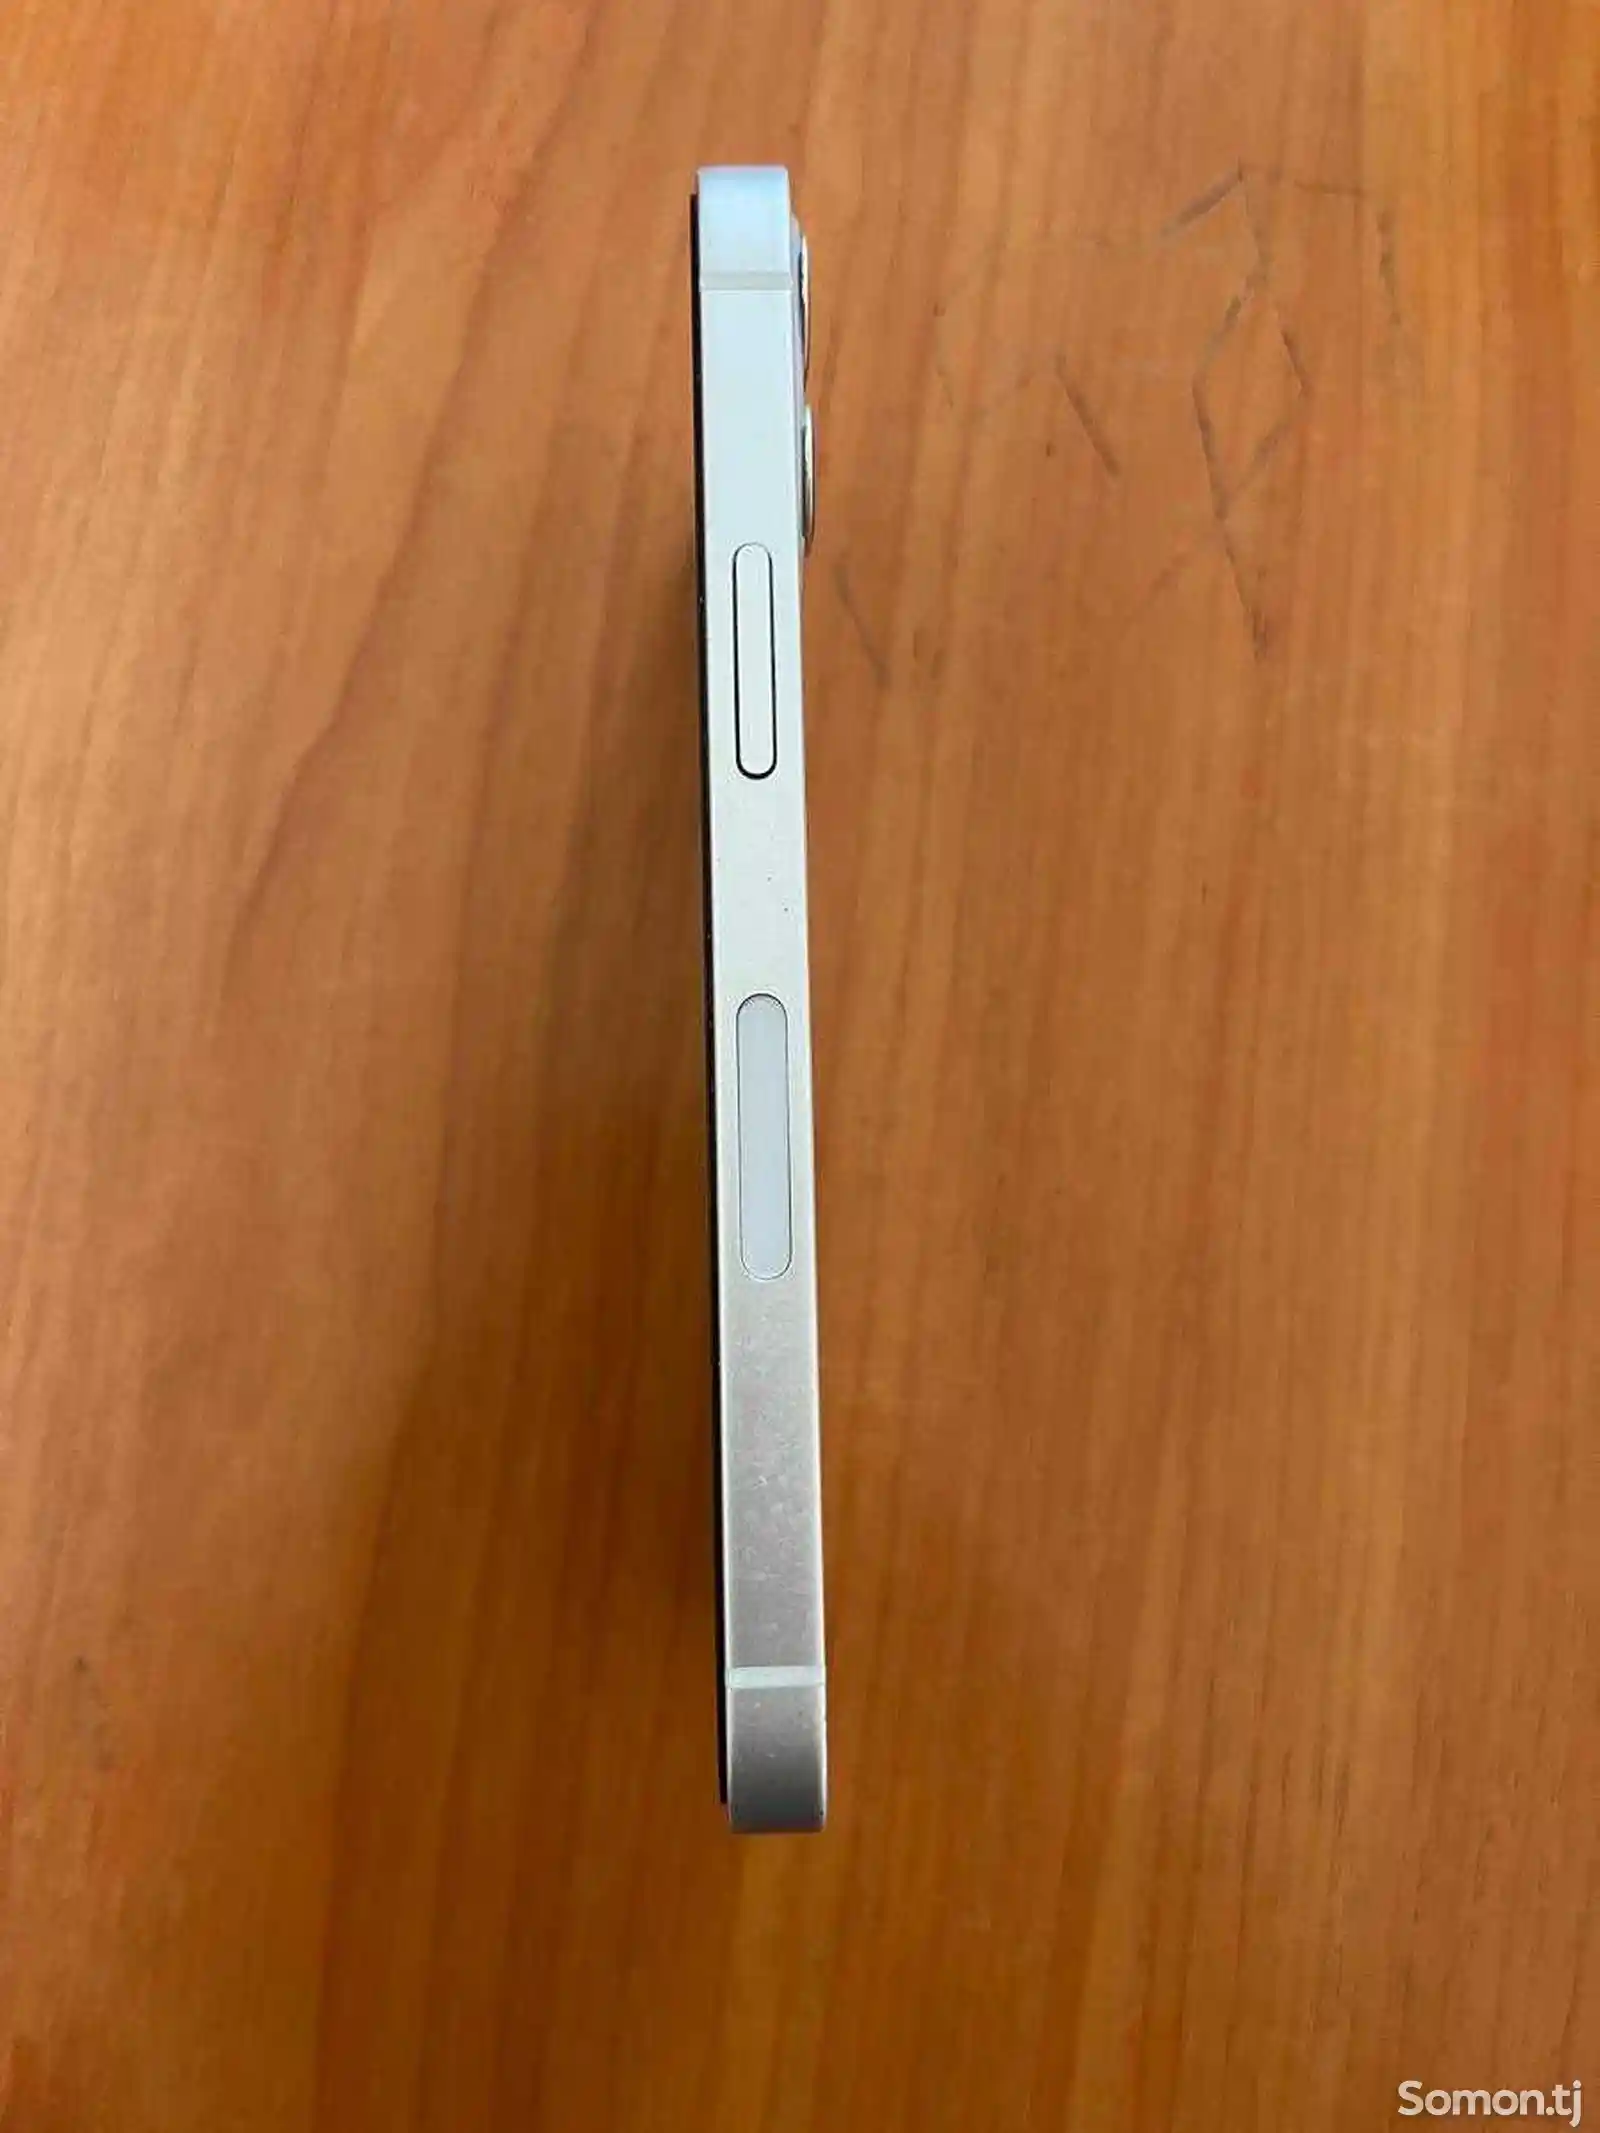 Apple iPhone 12 mini, White-2